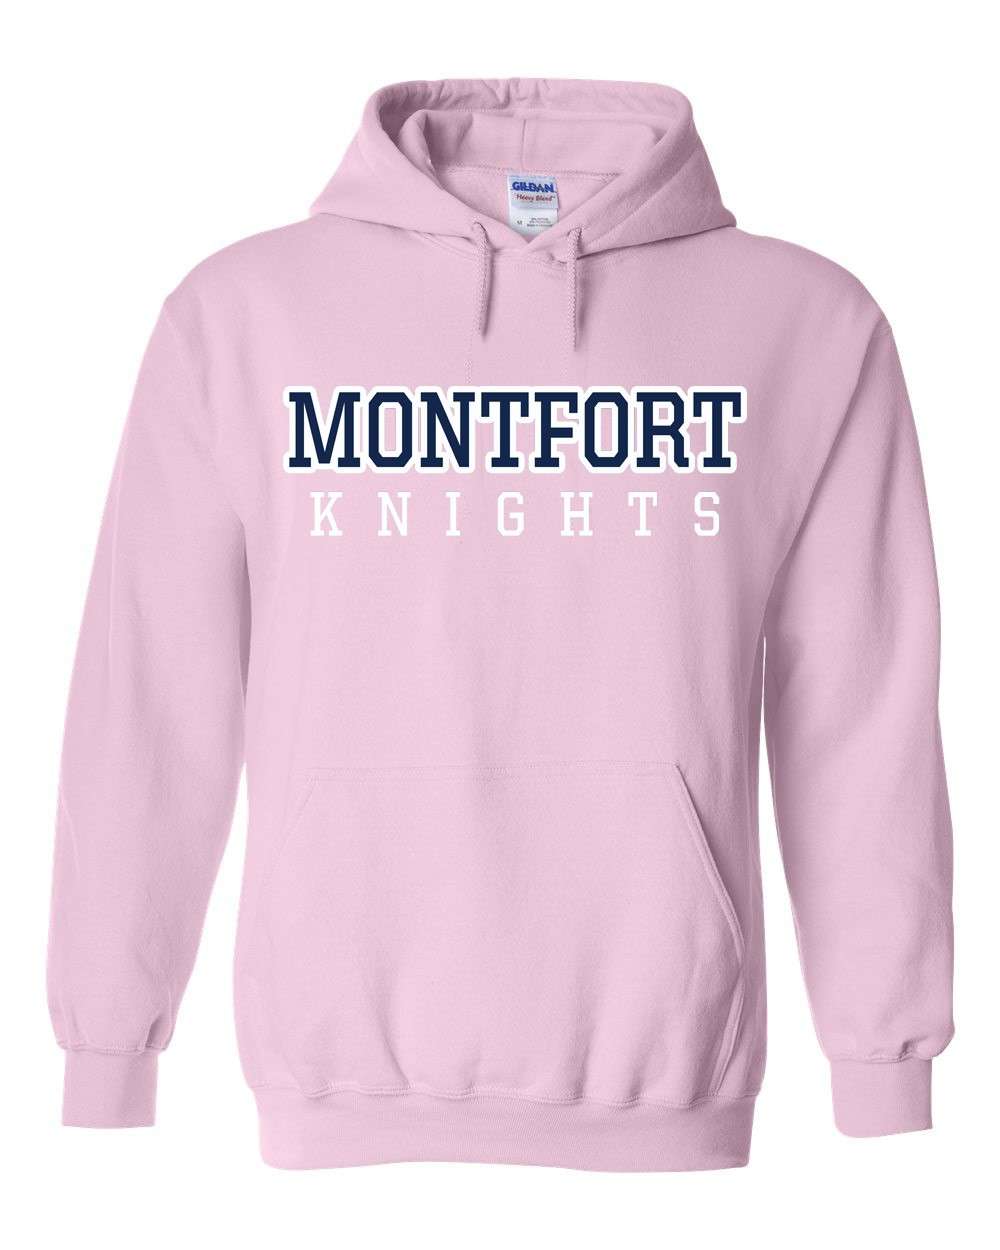 MONTFORT Spirit Hoodie w/ Navy Logo - Please allow 2-3 Weeks for Delivery